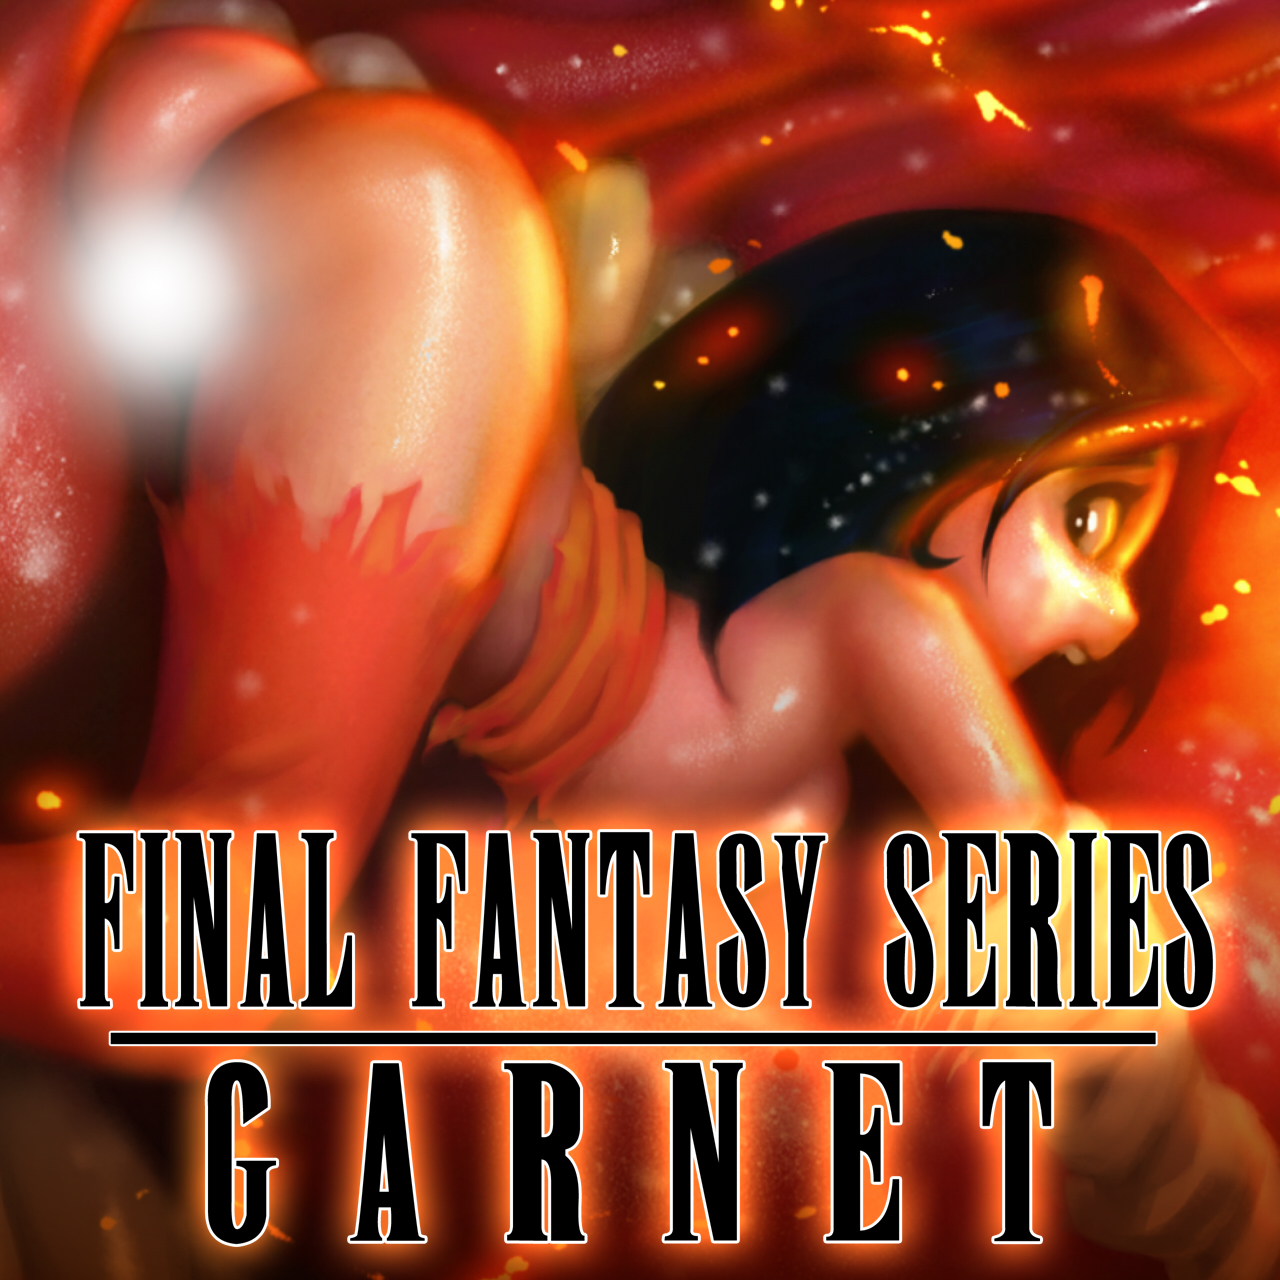 Final Fantasy Series: Garnet